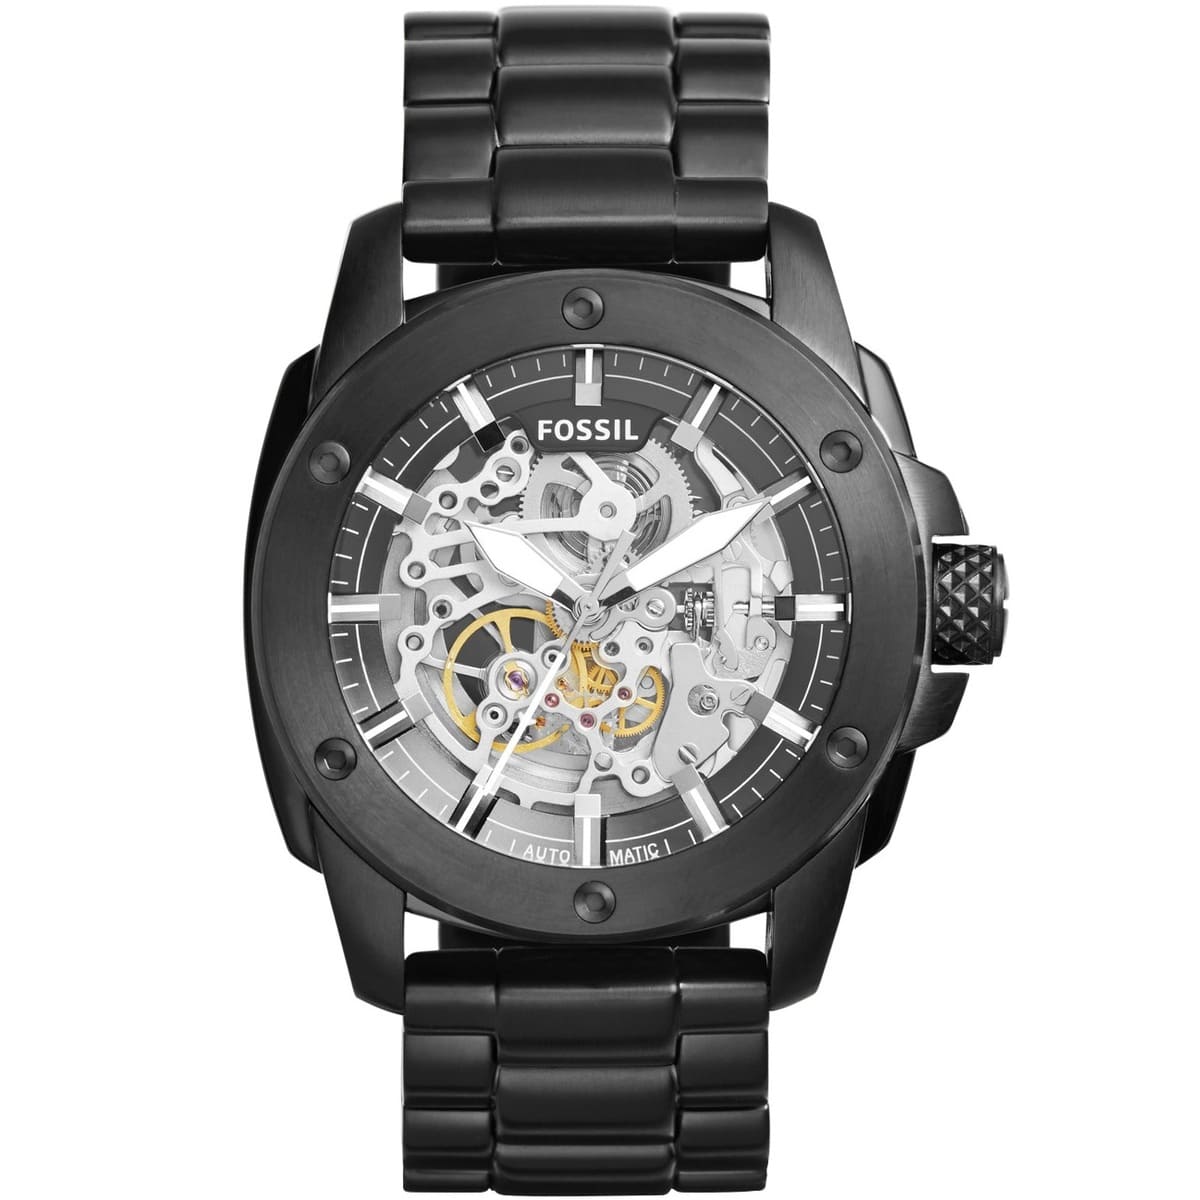 me3080-original-automatic-fossil-watch-metal-men